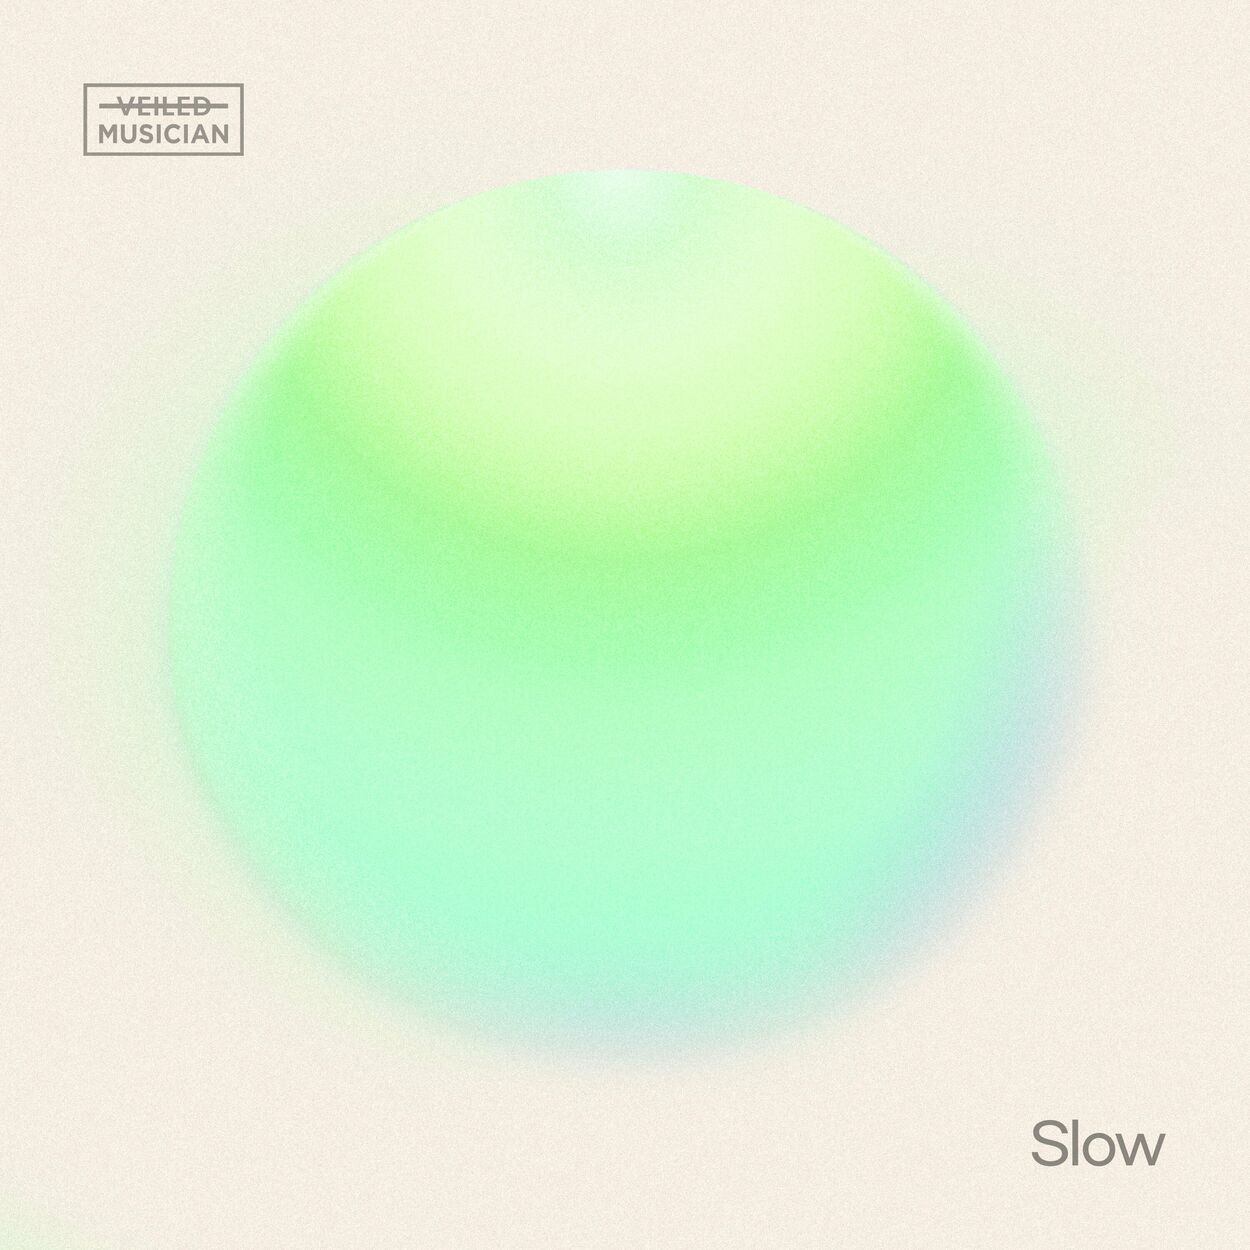 Paul Kim – Slow (Veiled Musician X Paul Kim with Seongsan-dong) – Single